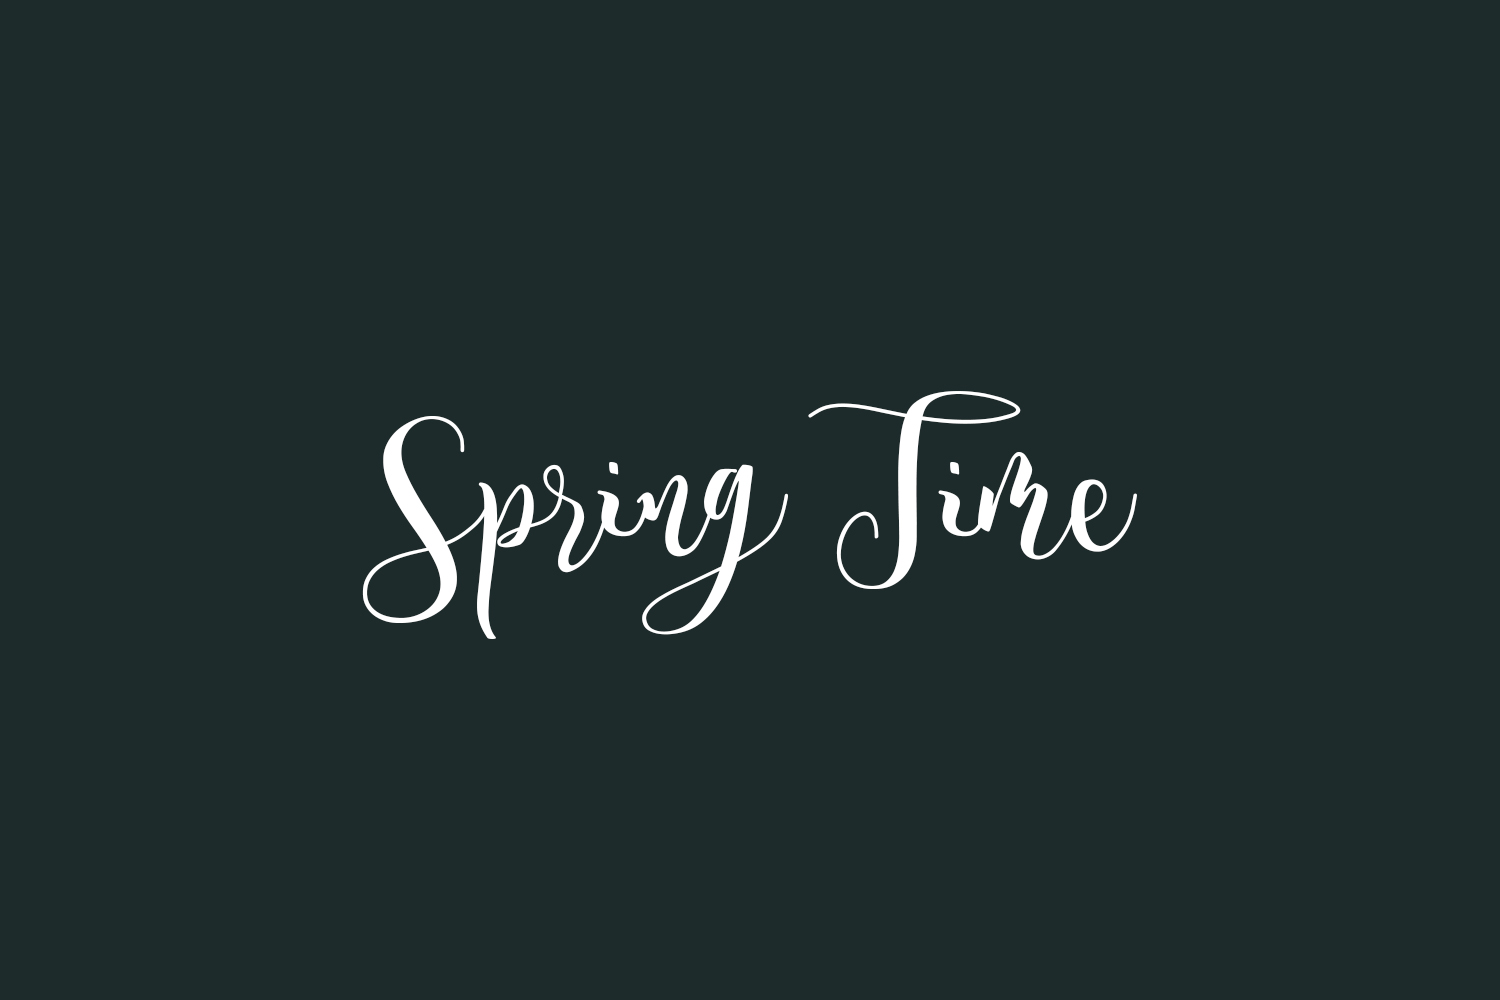 Spring Time Free Font